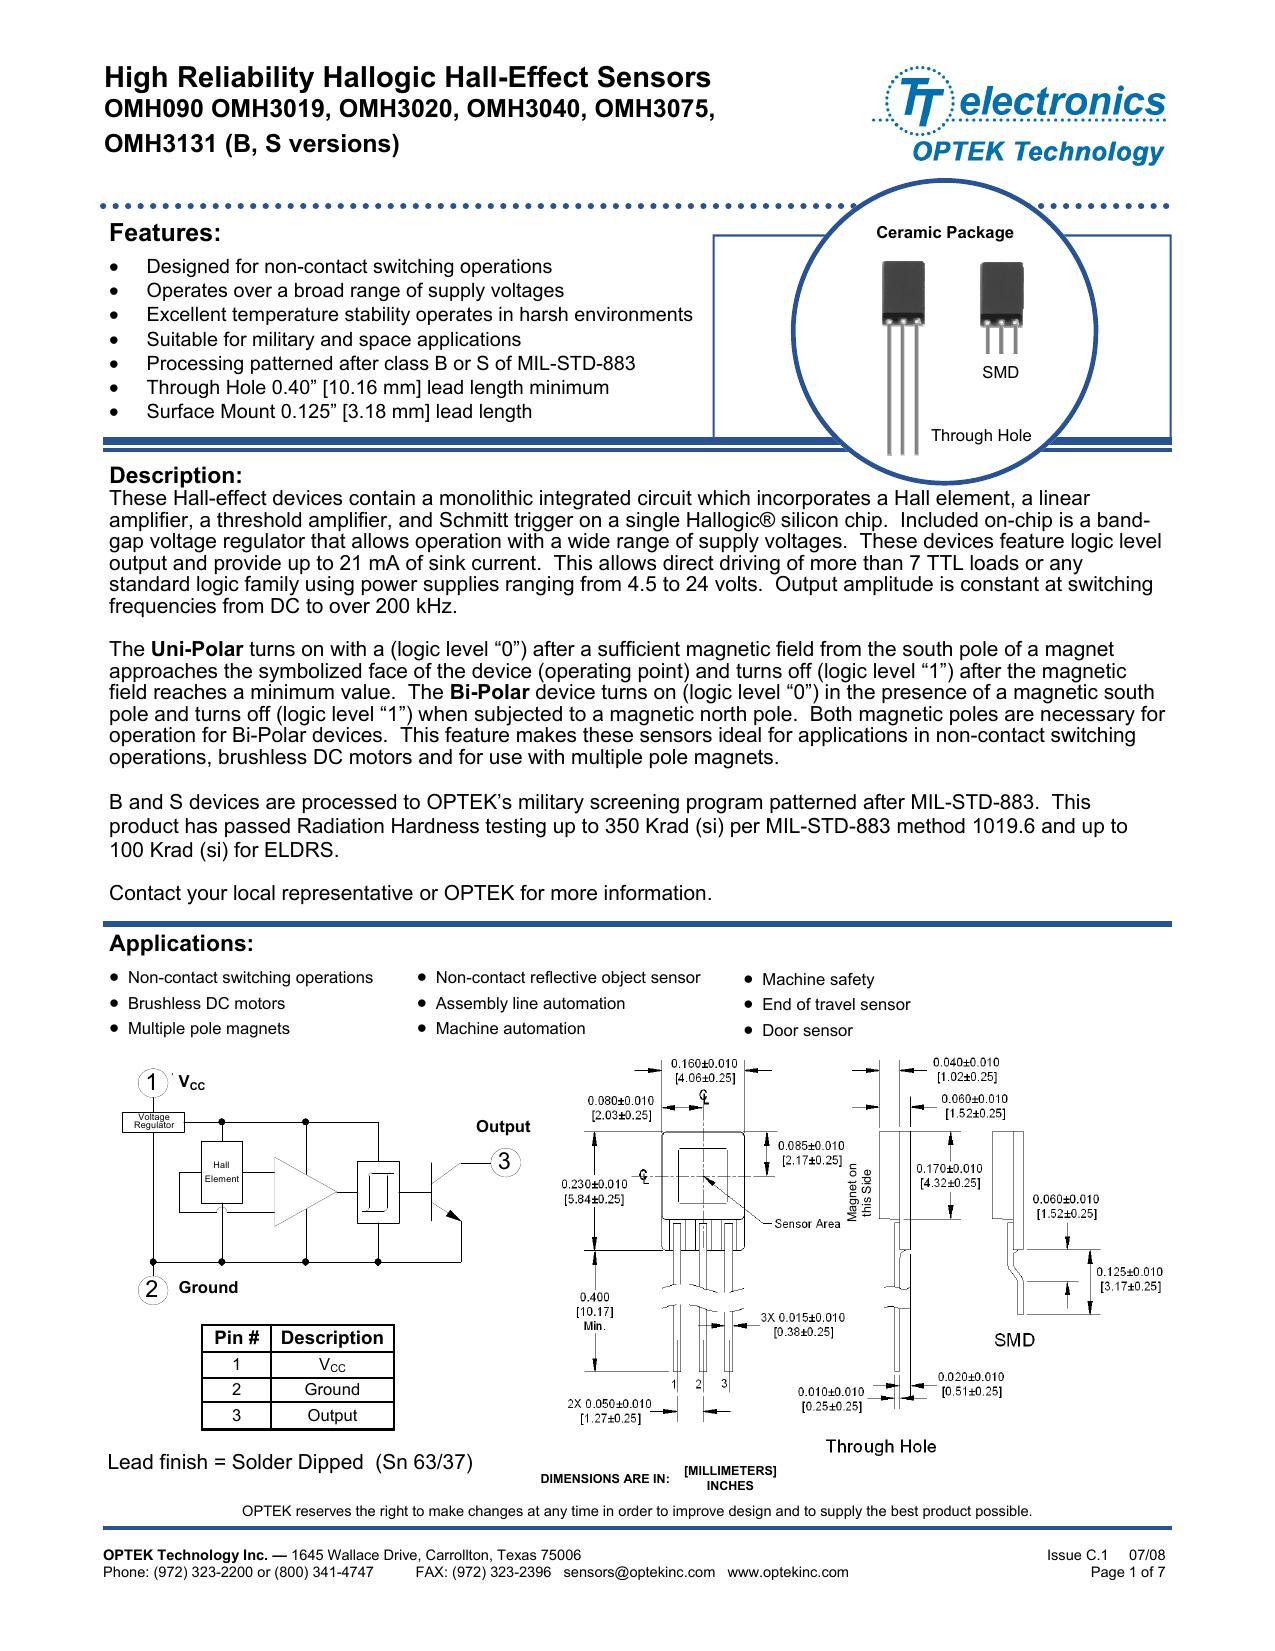 high-reliability-hallogic-hall-effect-sensors-omh-series-datasheet.pdf